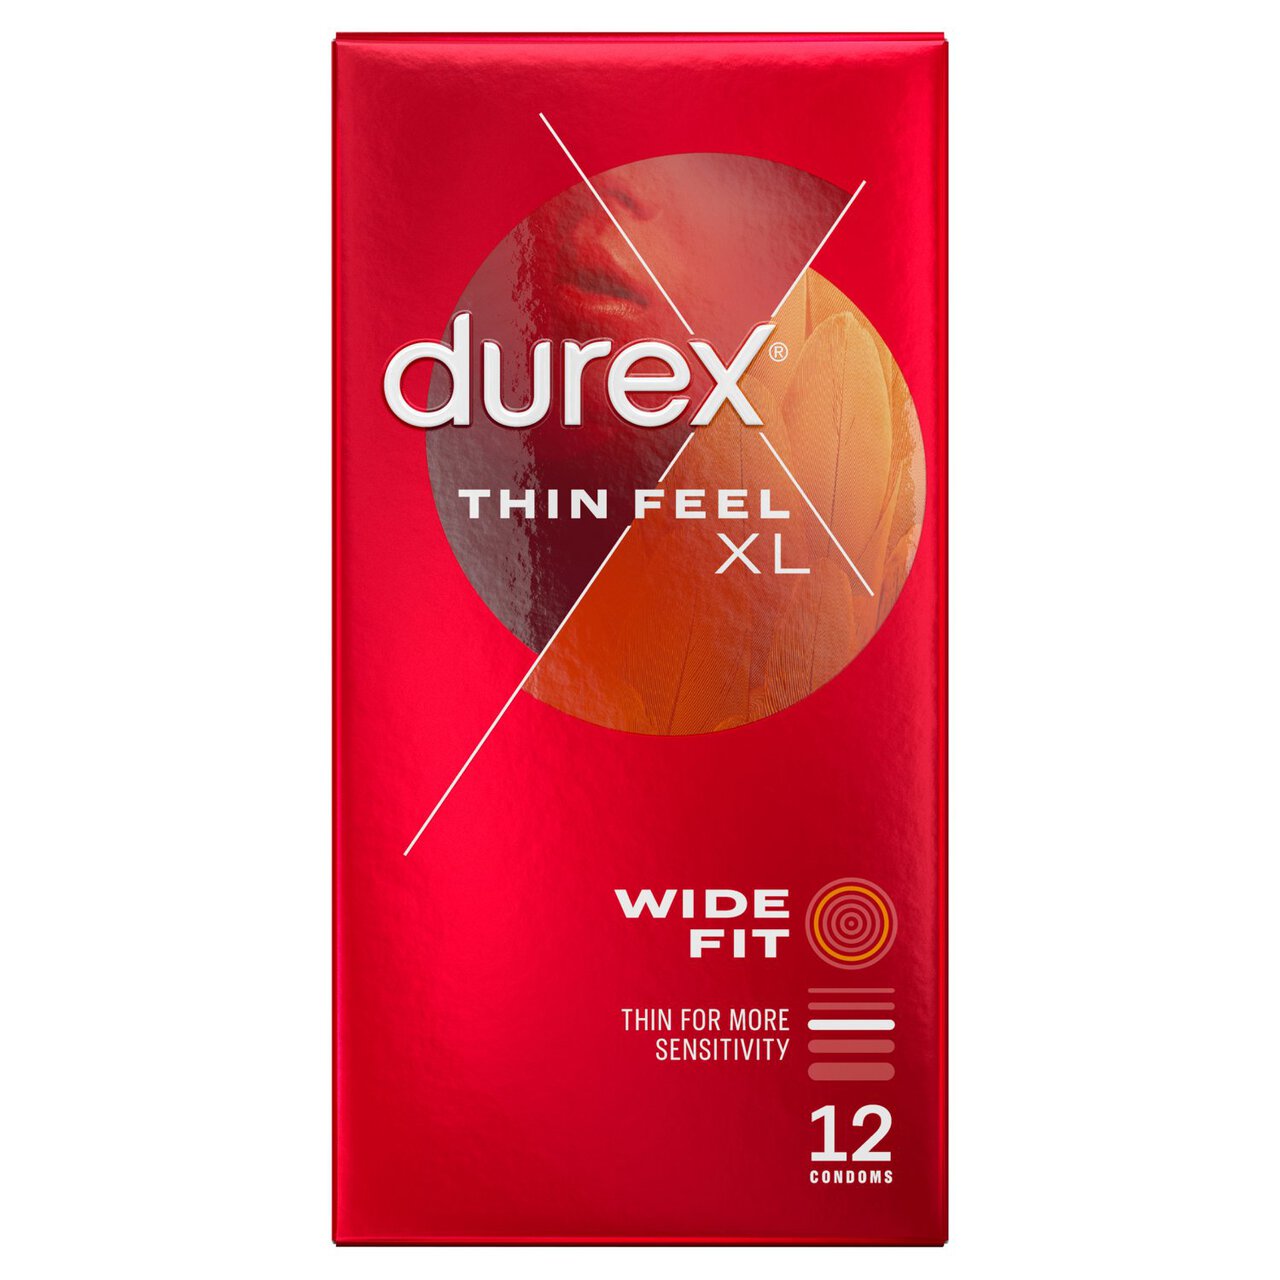 Durex Thin Feel XL Condoms More Sensitivity Wide Fit 12 per pack